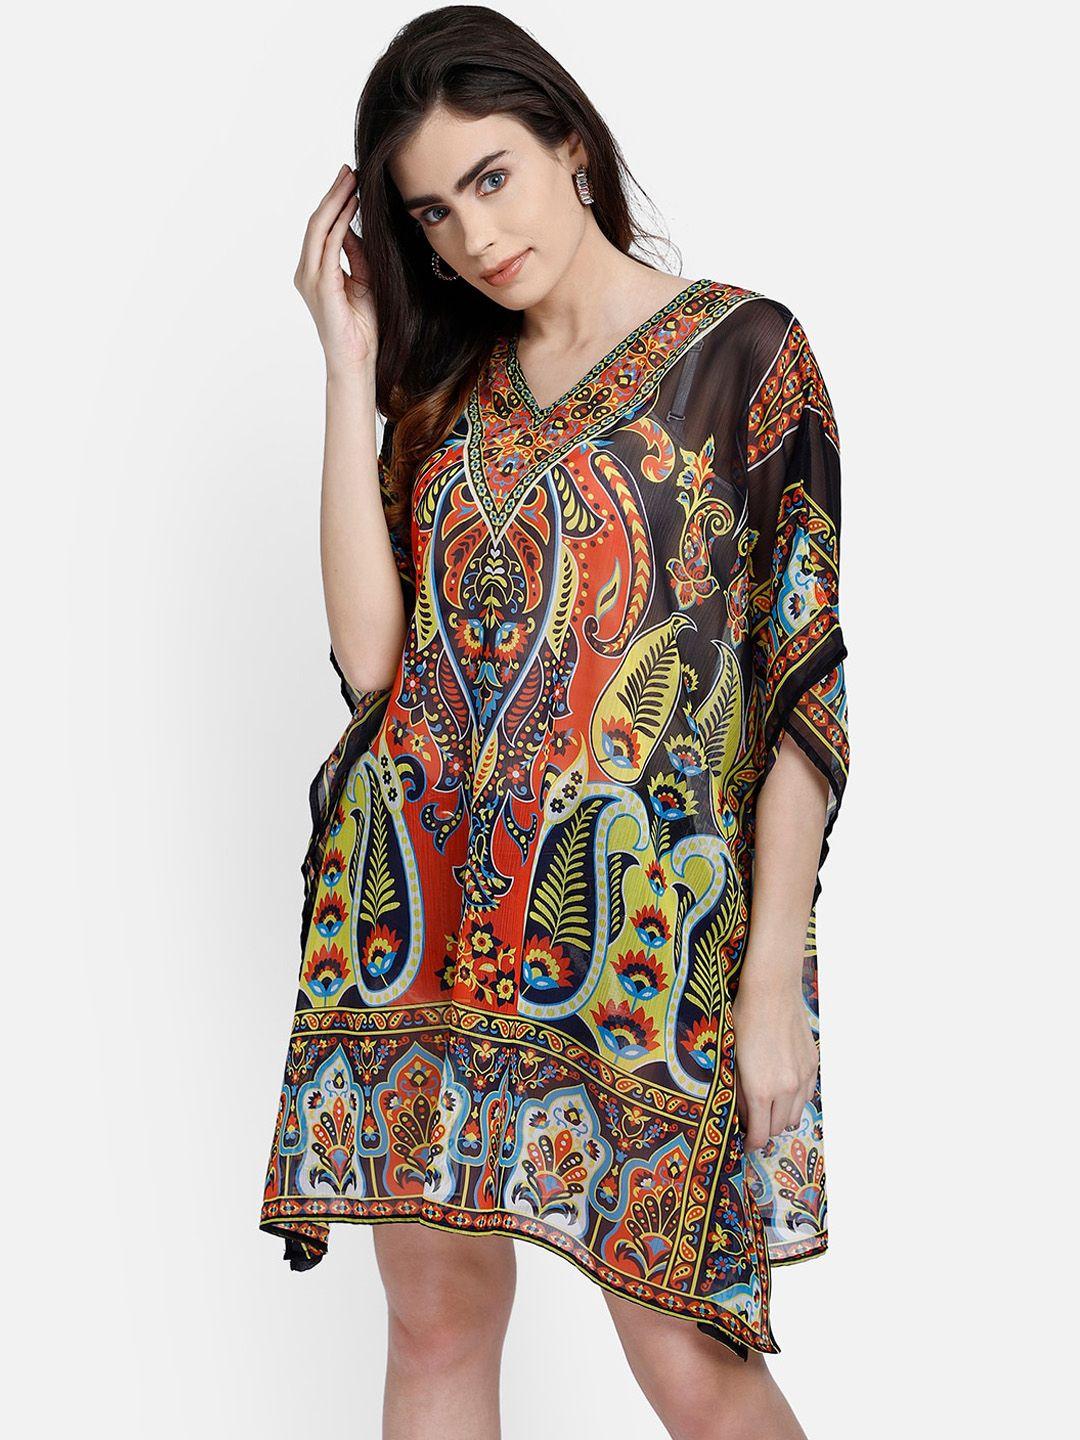 aditi wasan multicoloured ethnic motifs kaftan dress